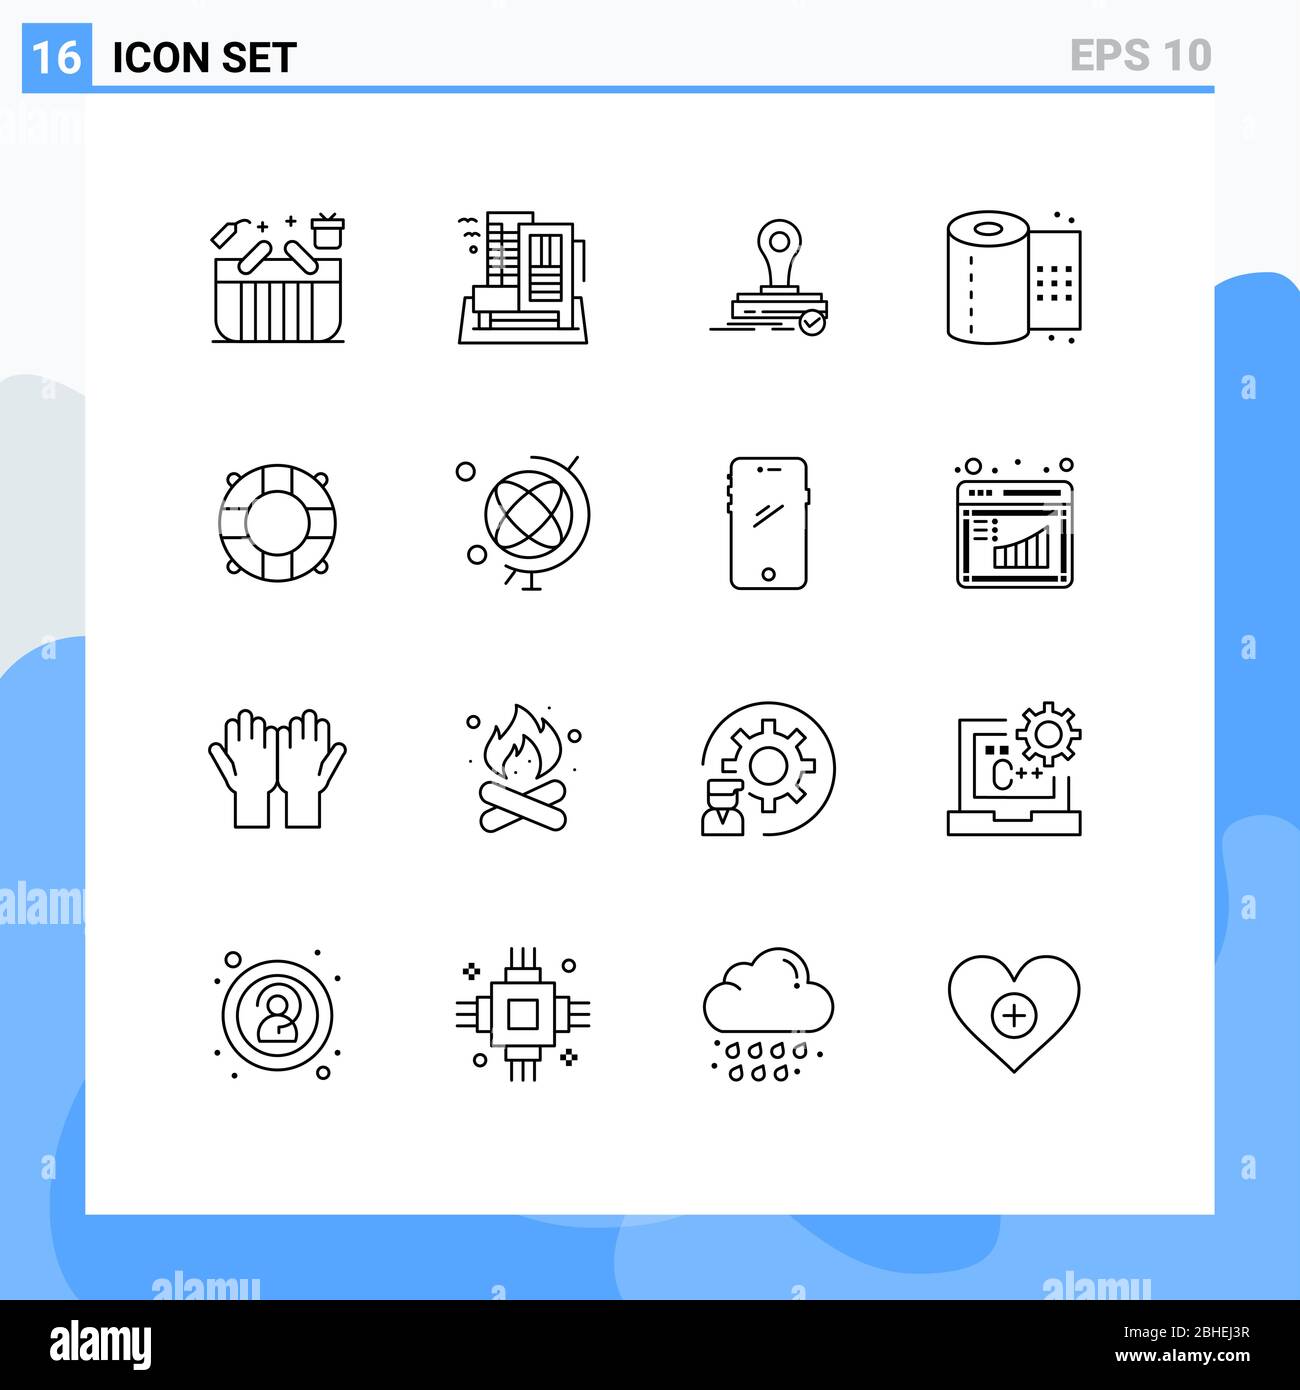 Set of 16 Modern UI Icons Symbols Signs for toilet paper, paper, home, bathroom, press Editable Vector Design Elements Stock Vector